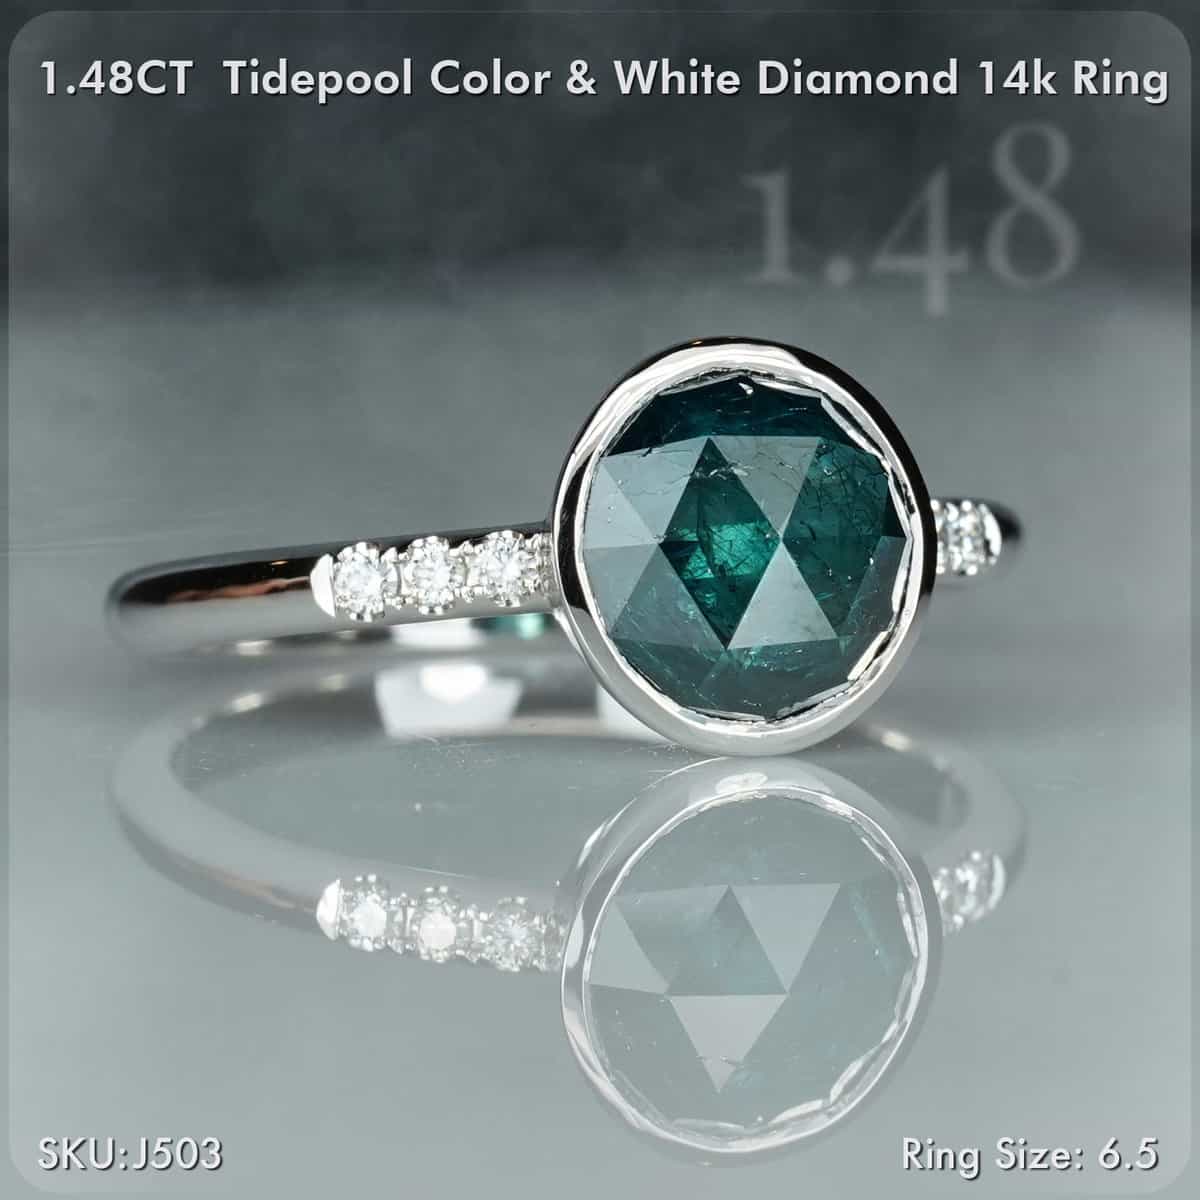 1.54CT Tidepool & White Diamond Ring